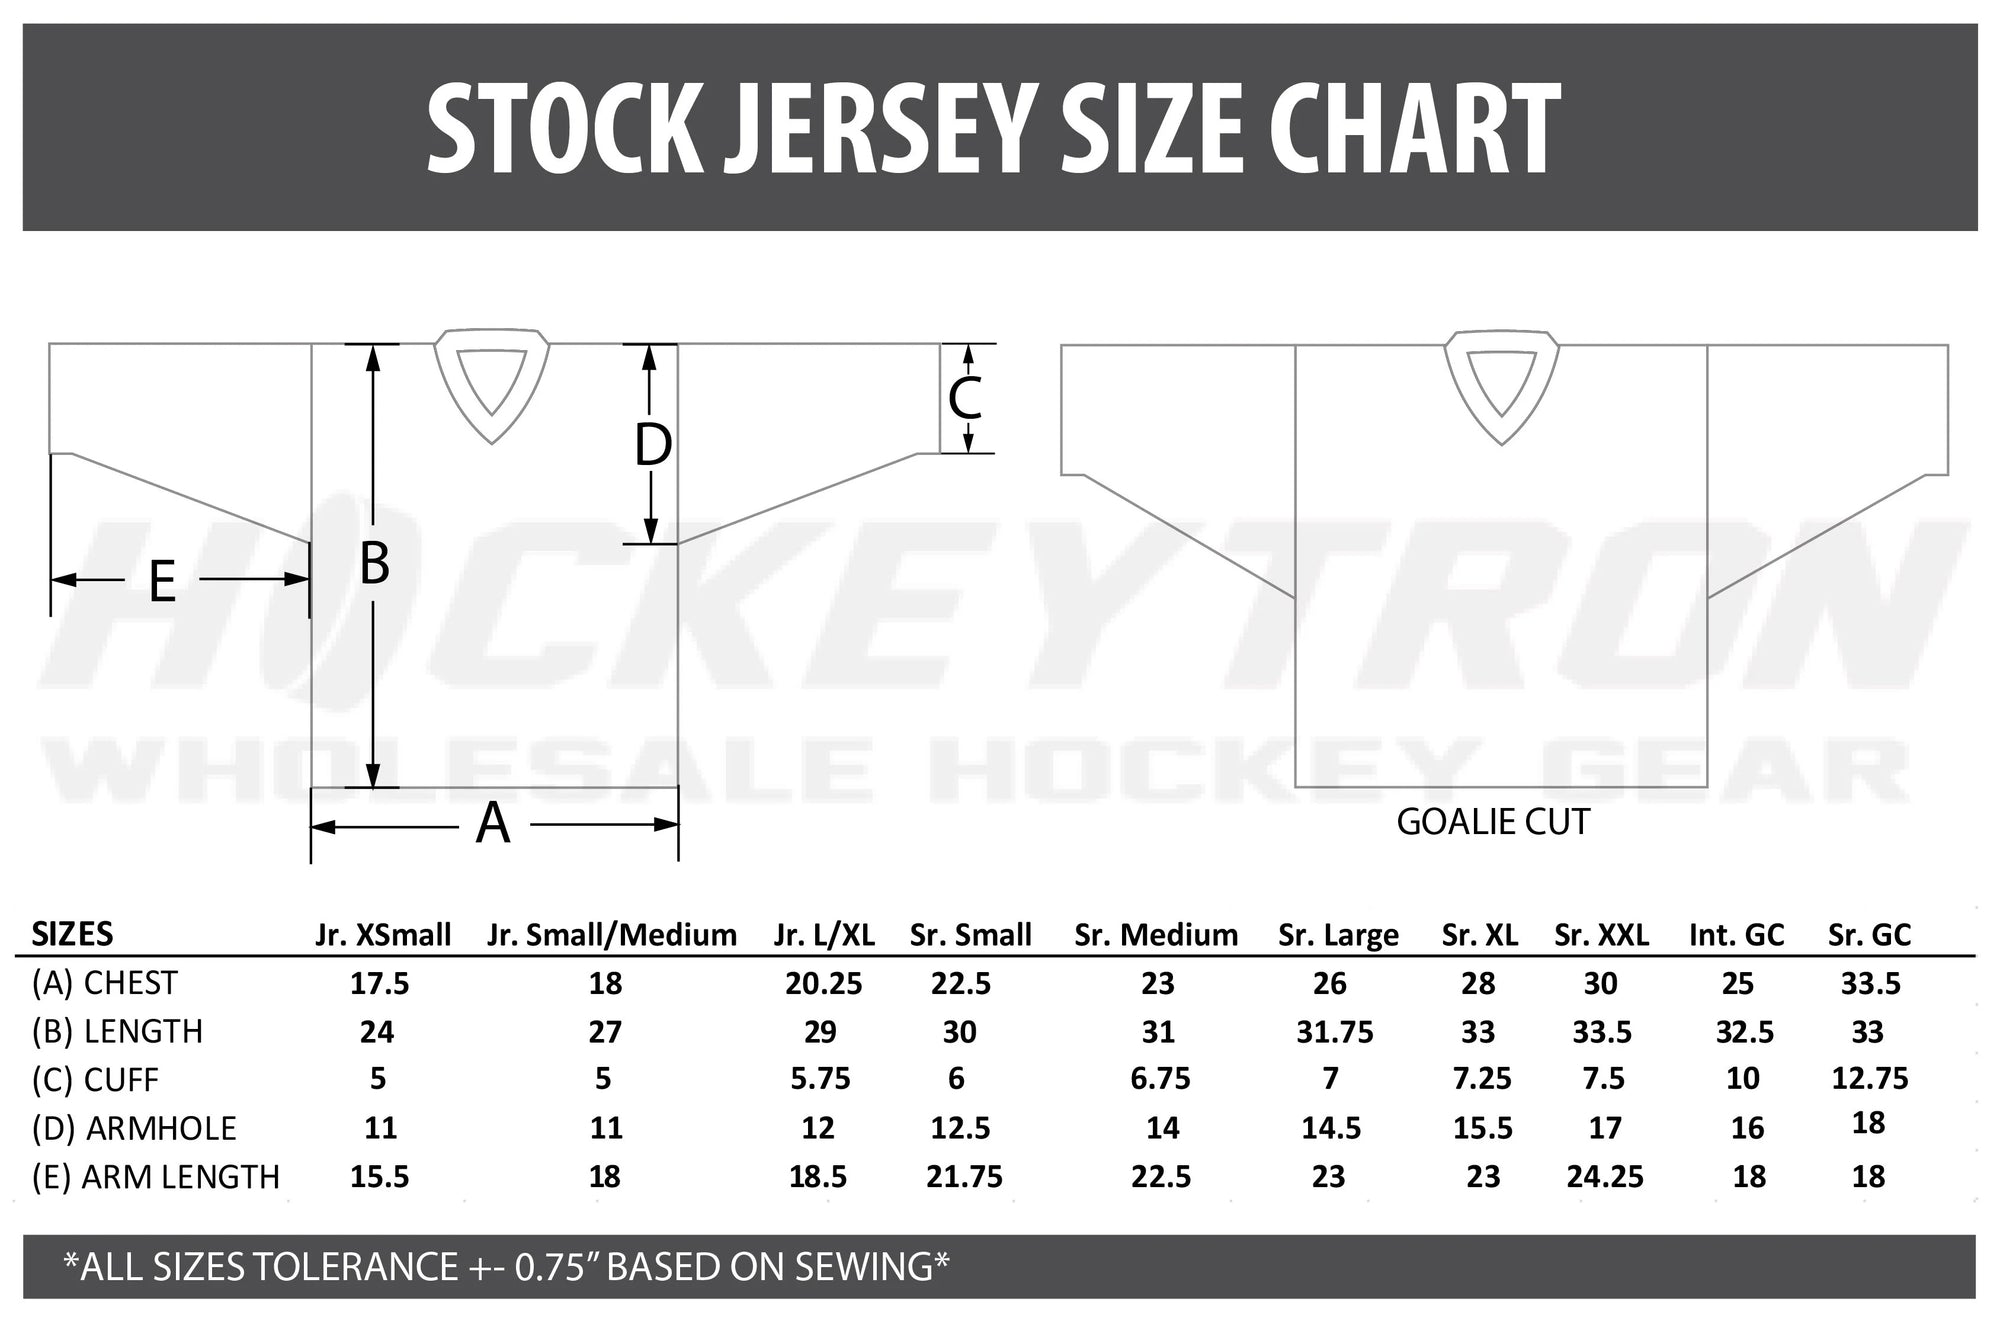 Kids Nike Stock Board Reversible Practice Jersey XL / TM Navy/Tm White/White